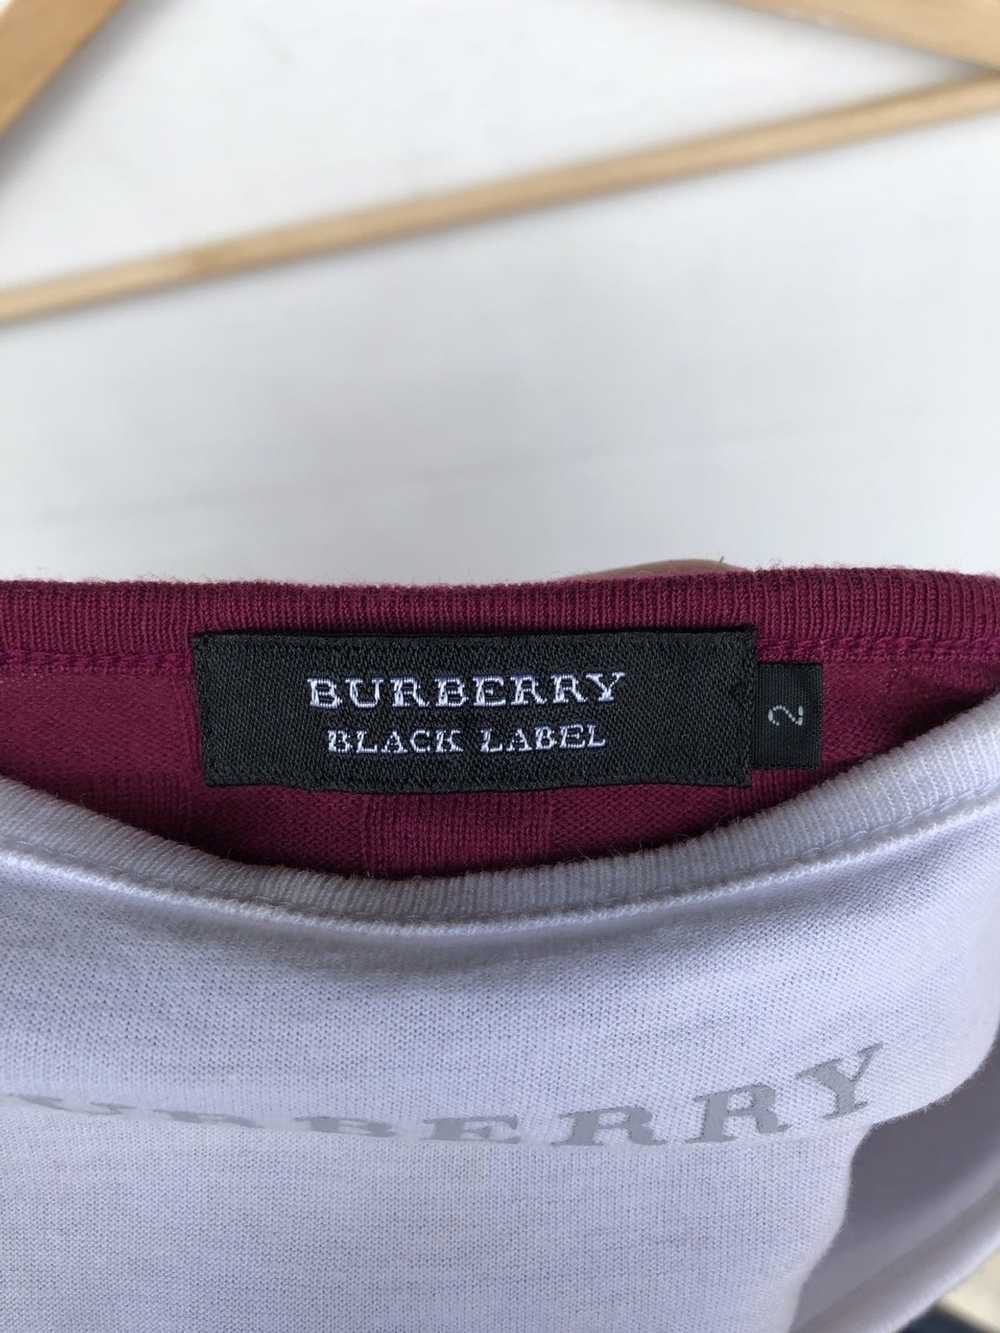 Burberry Burberry Black Label Long Sleeve T-Shirt - image 11